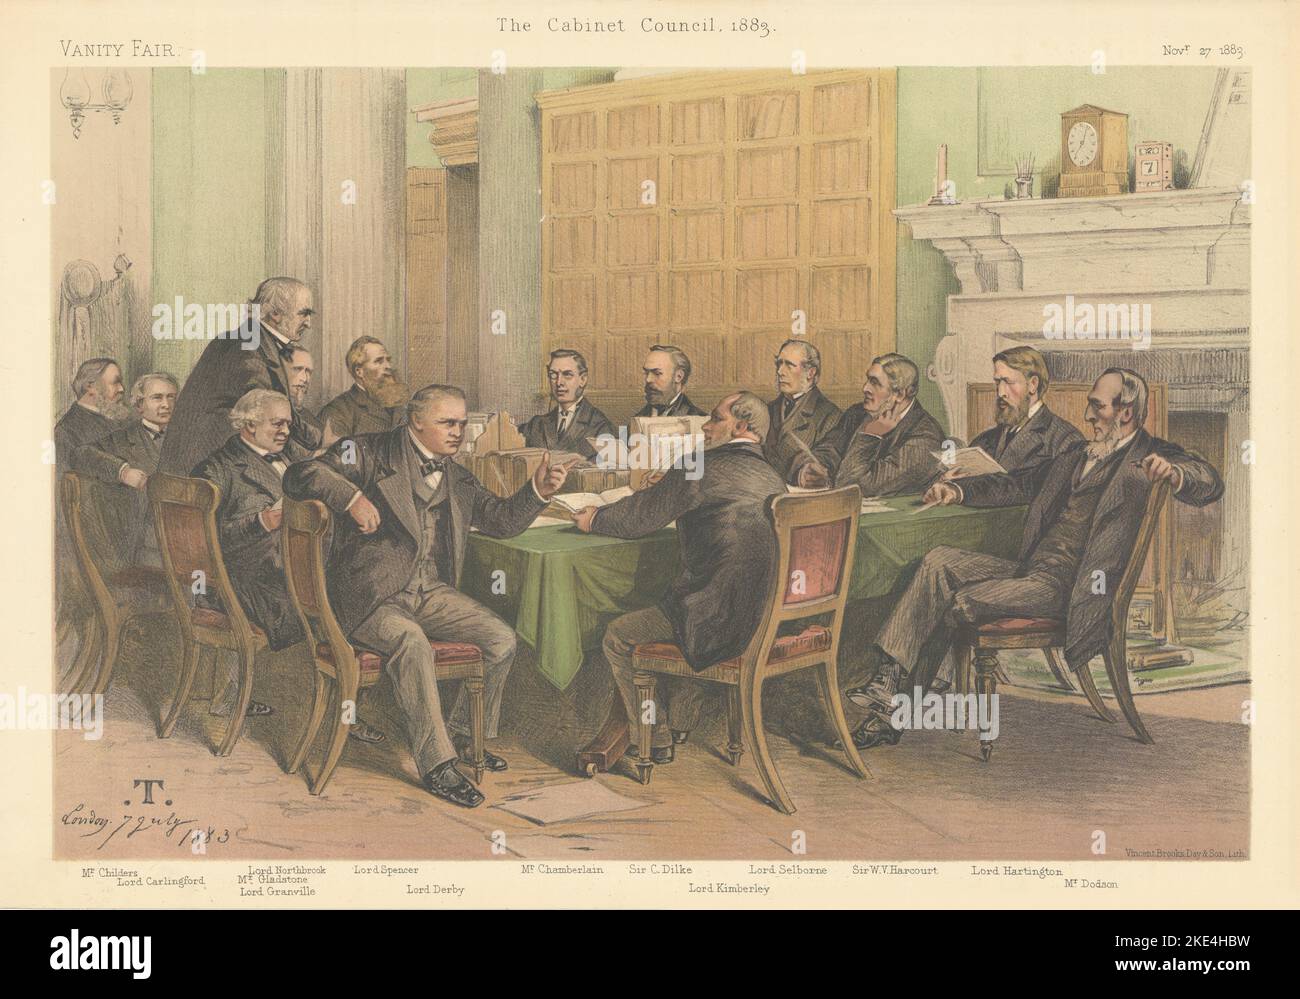 VANITY FAIR SPY CARTOON 'The Gladstone Cabinet' Council. Politics 1883 print Stock Photo